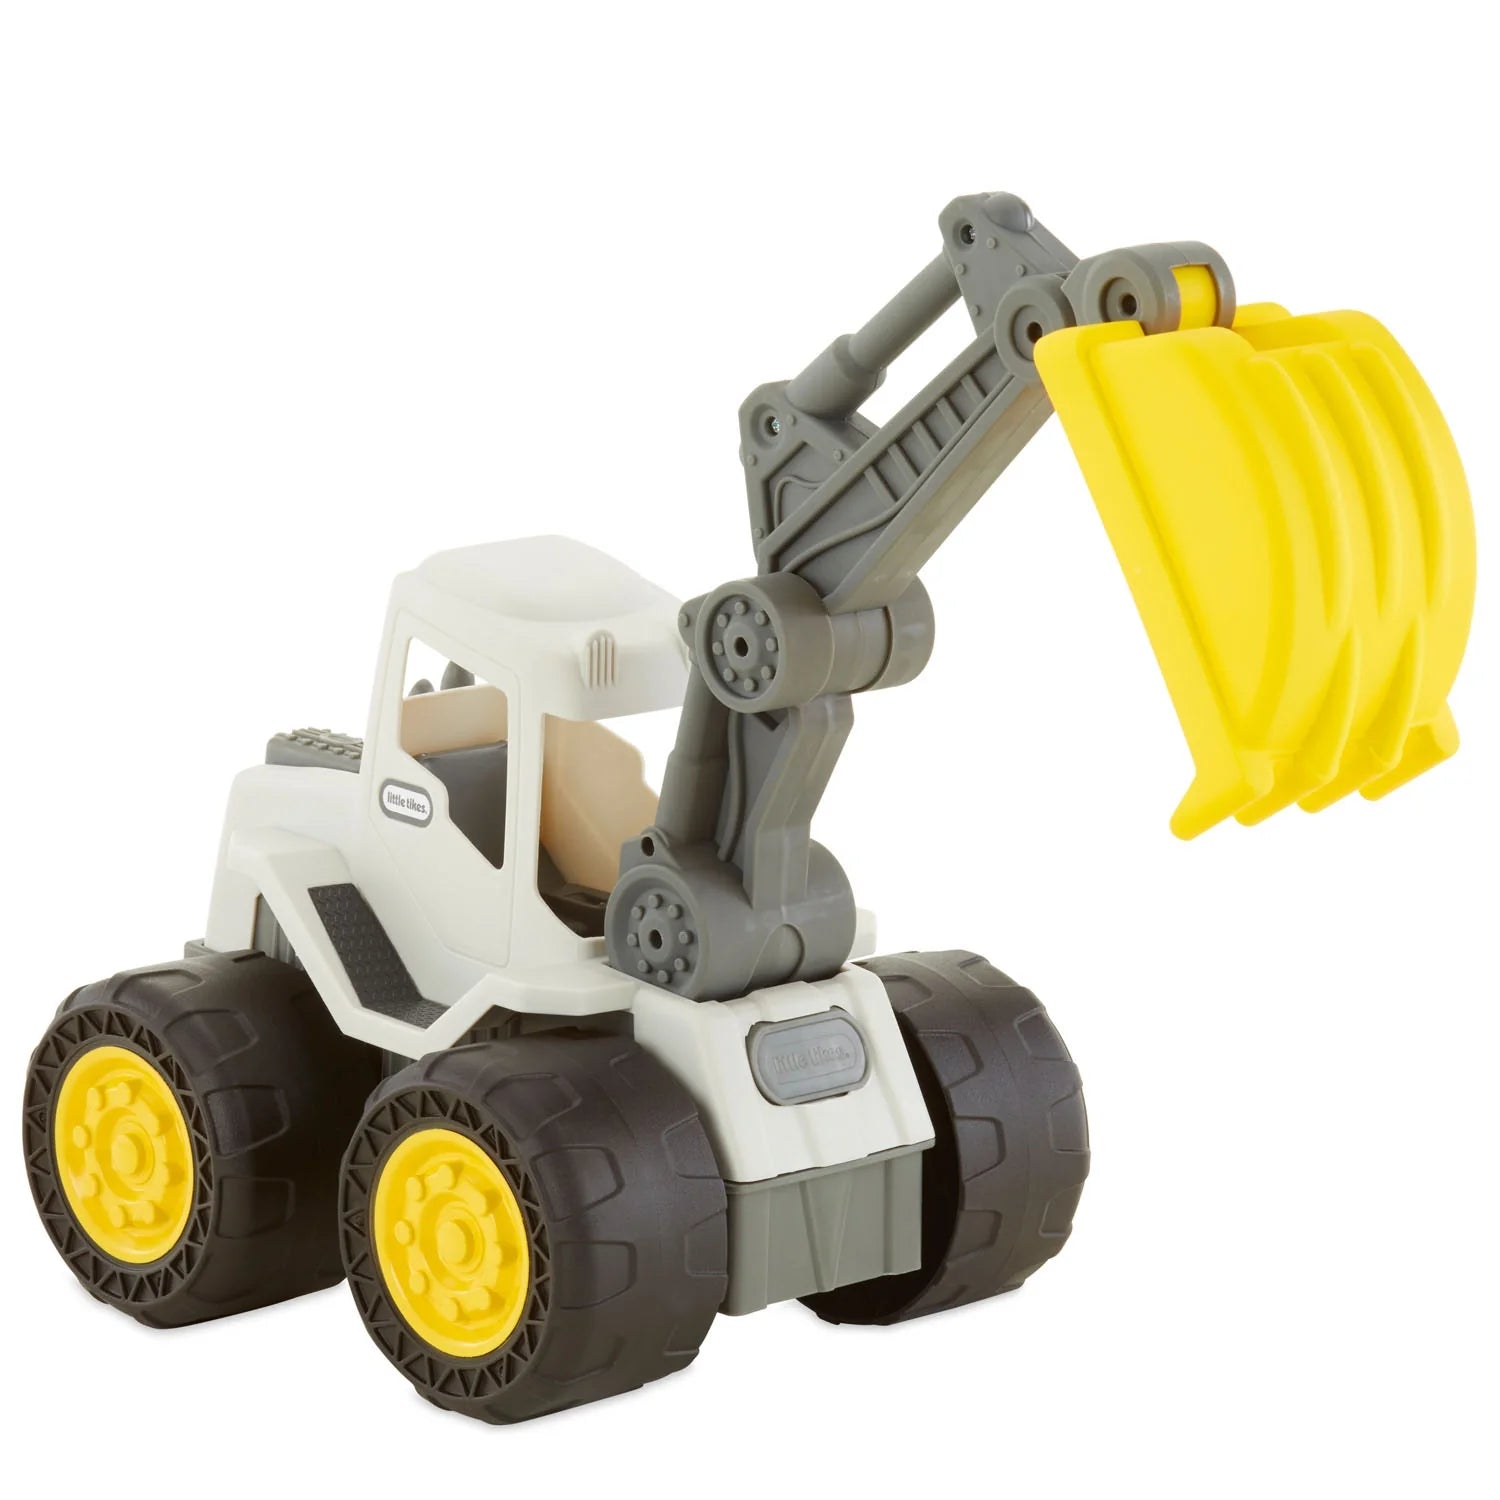 Little Tikes Dirt Diggers™ 2-IN-1 Haulers Excavator - Yellow